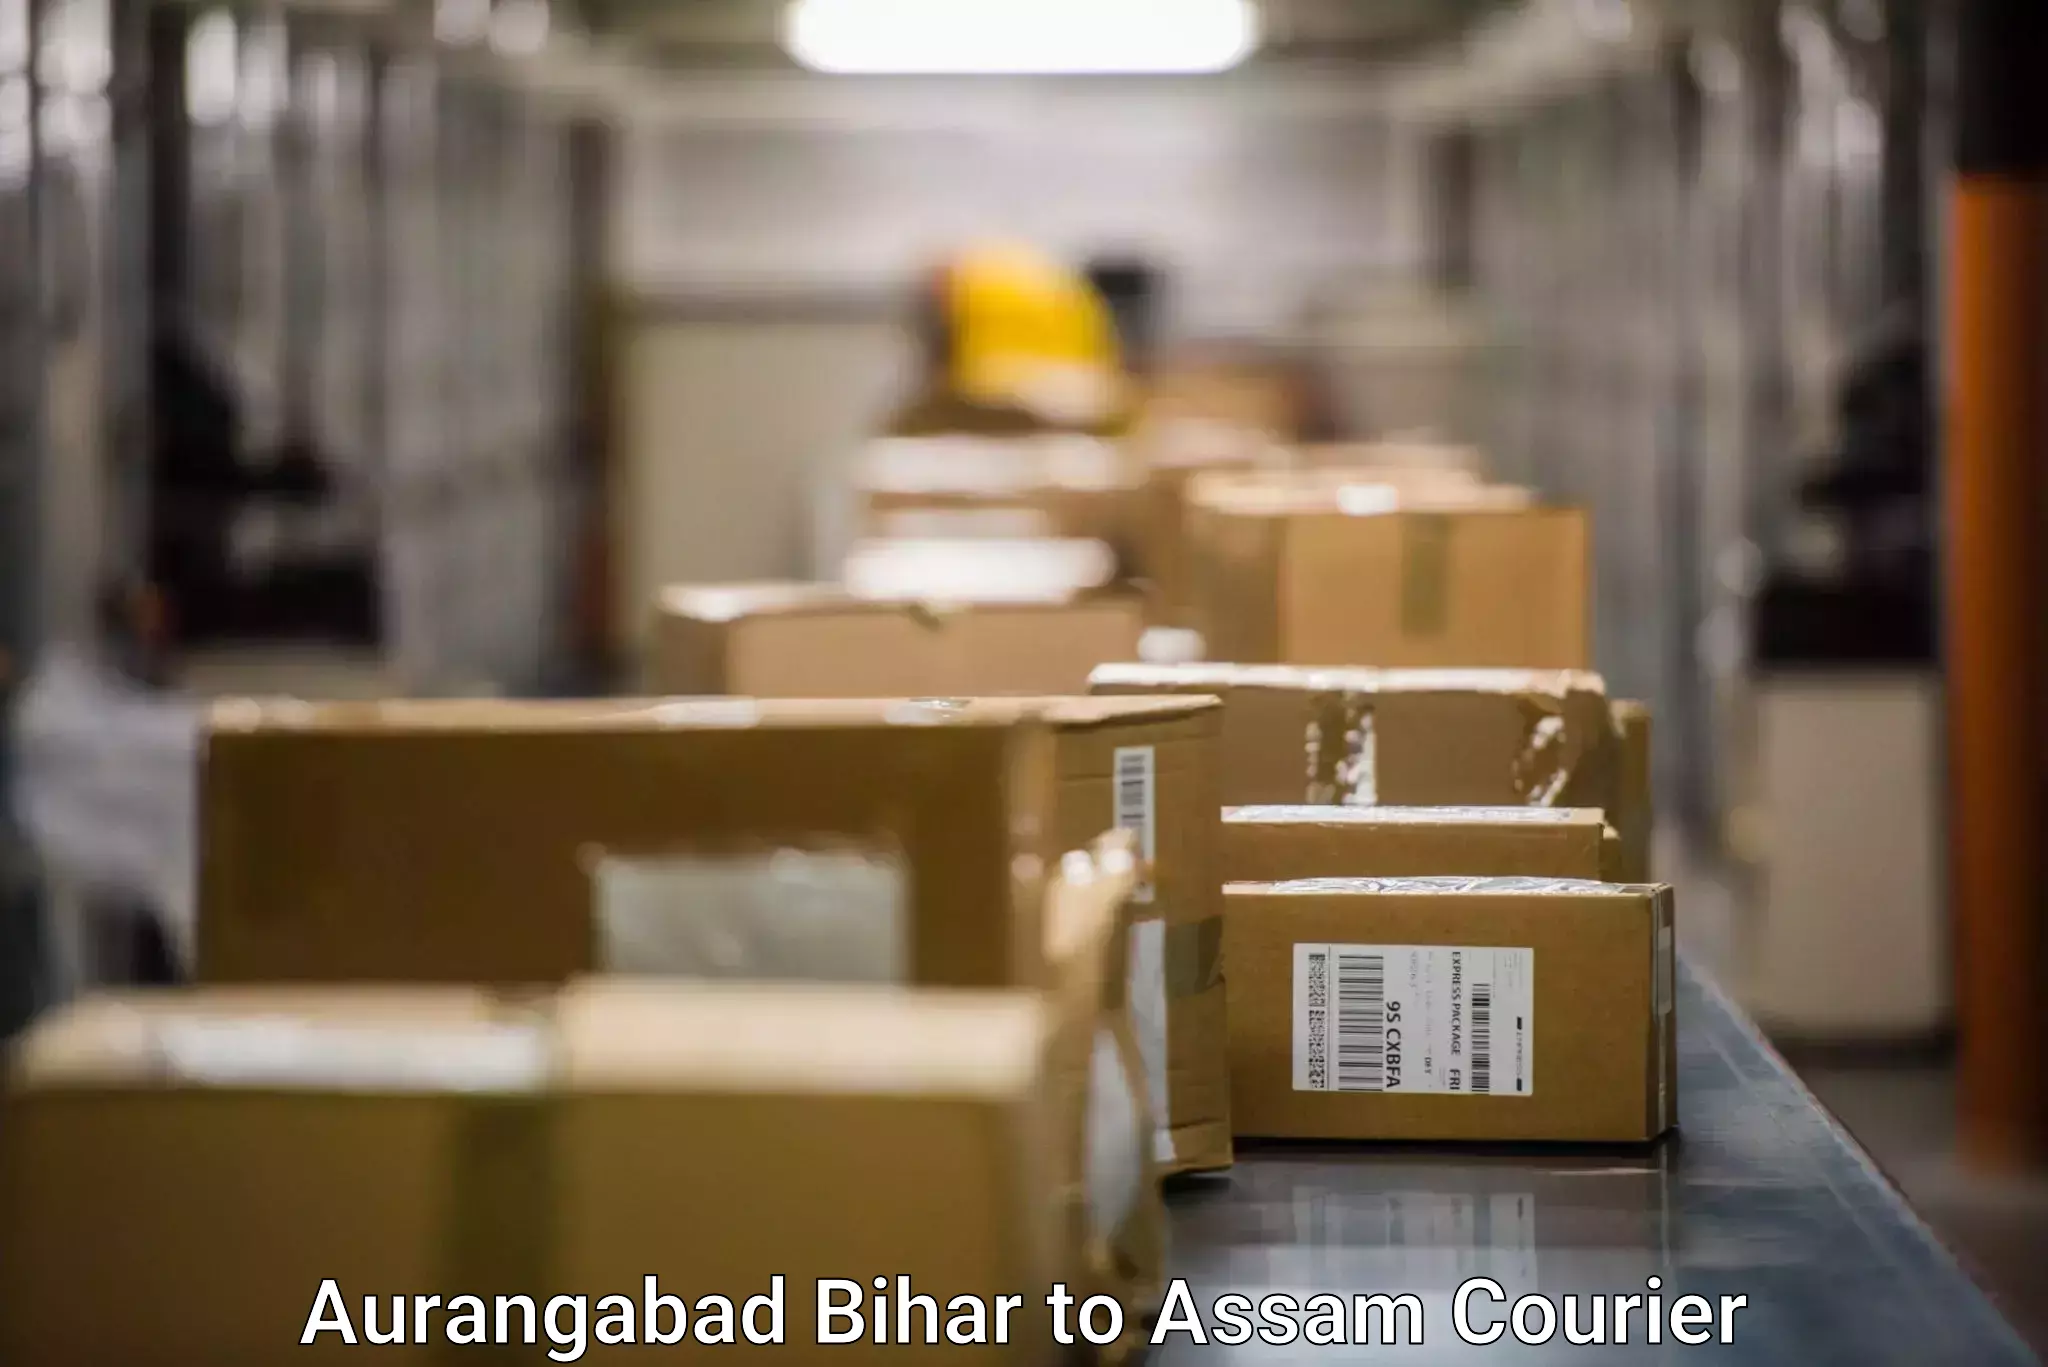 Courier service comparison Aurangabad Bihar to Udharbond